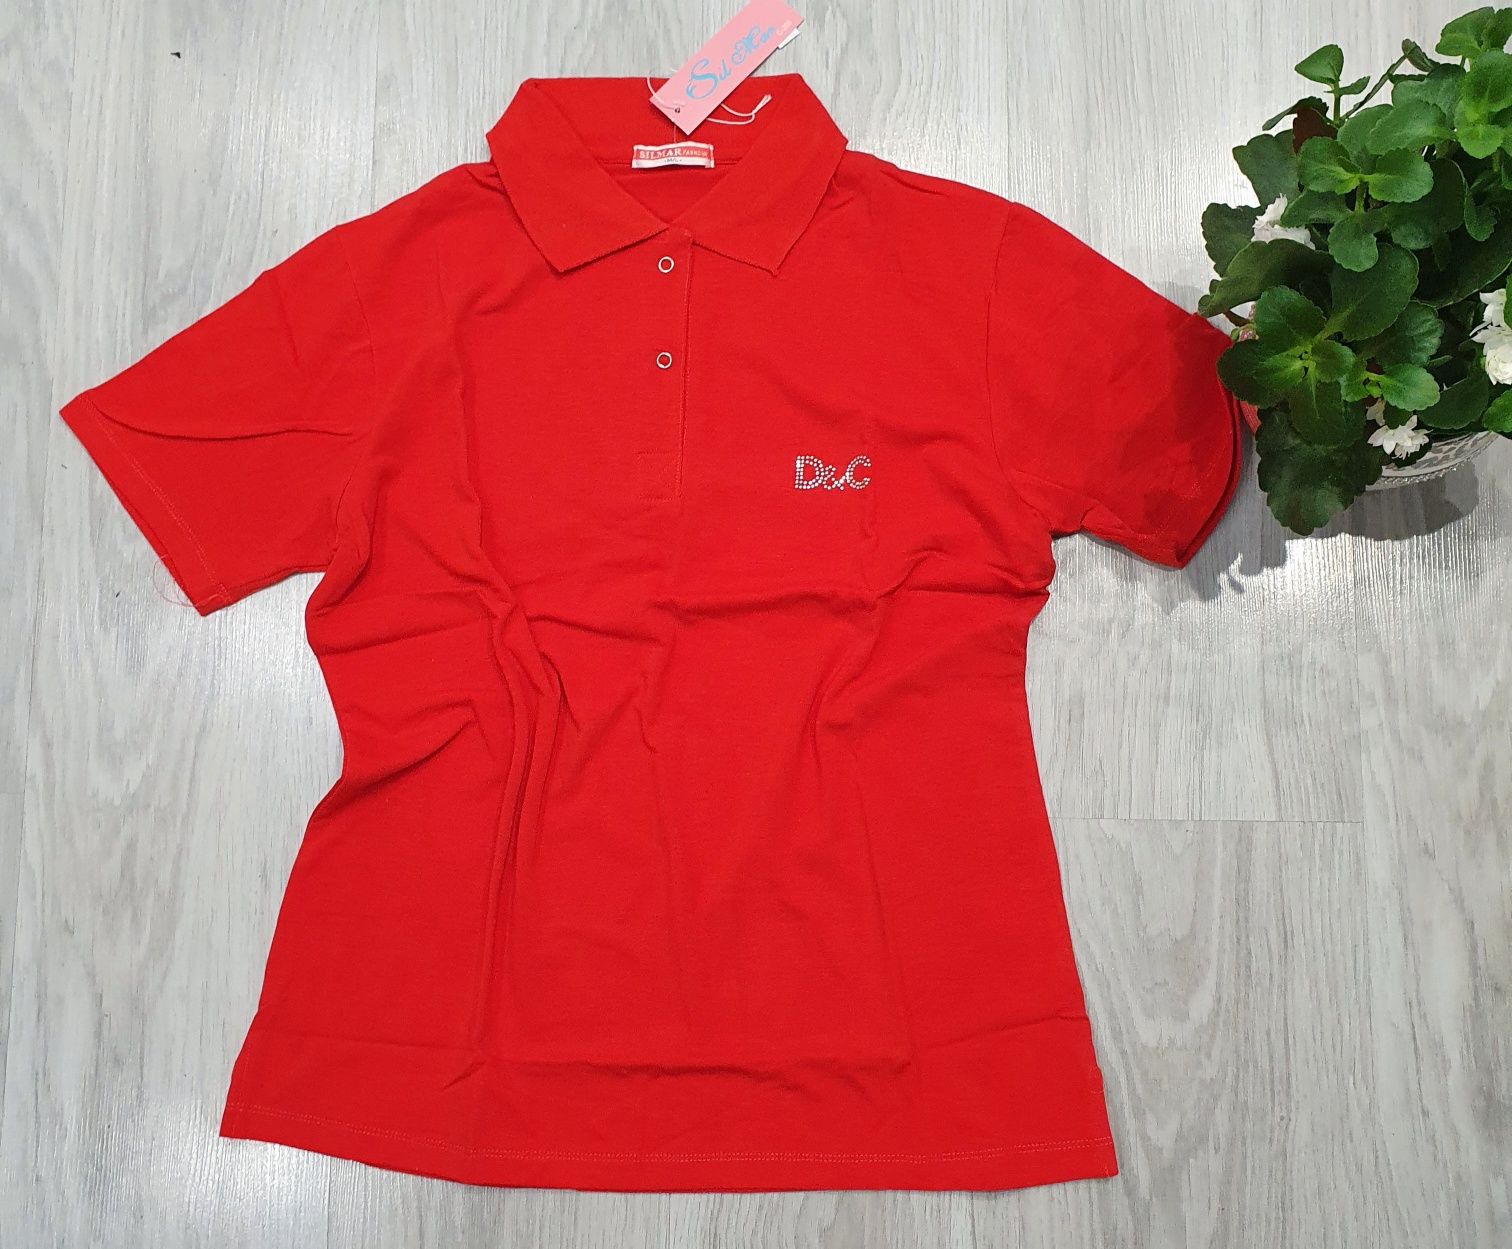 Bluzka polo czerwona M/L. OBK0106